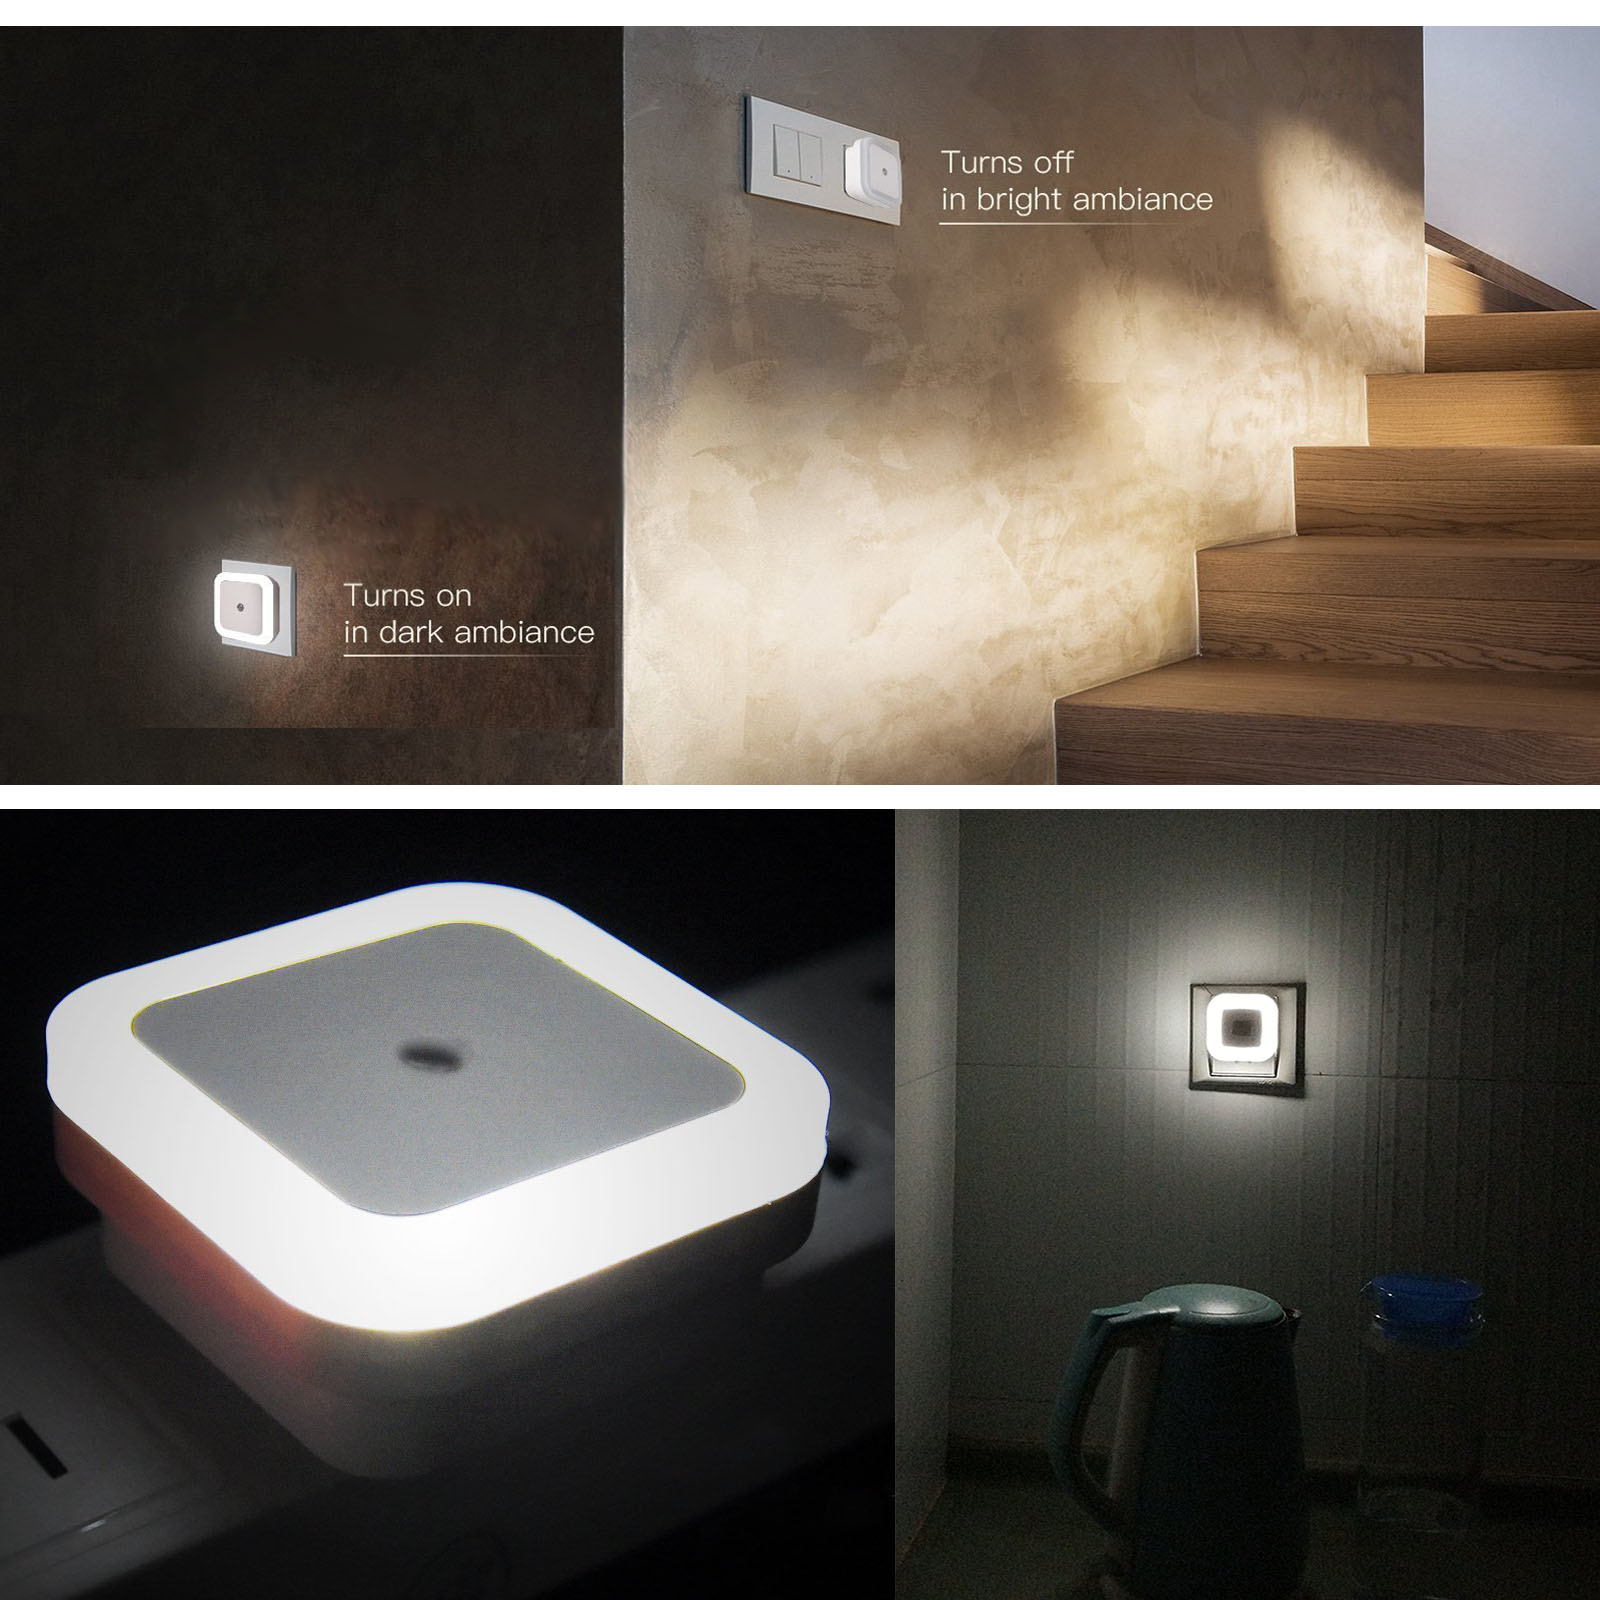 6pcs Auto Light Sensor LED Room Night Light Smart Plug in Wall Lamp for Home Bedroom Kitchen - image 4 of 8